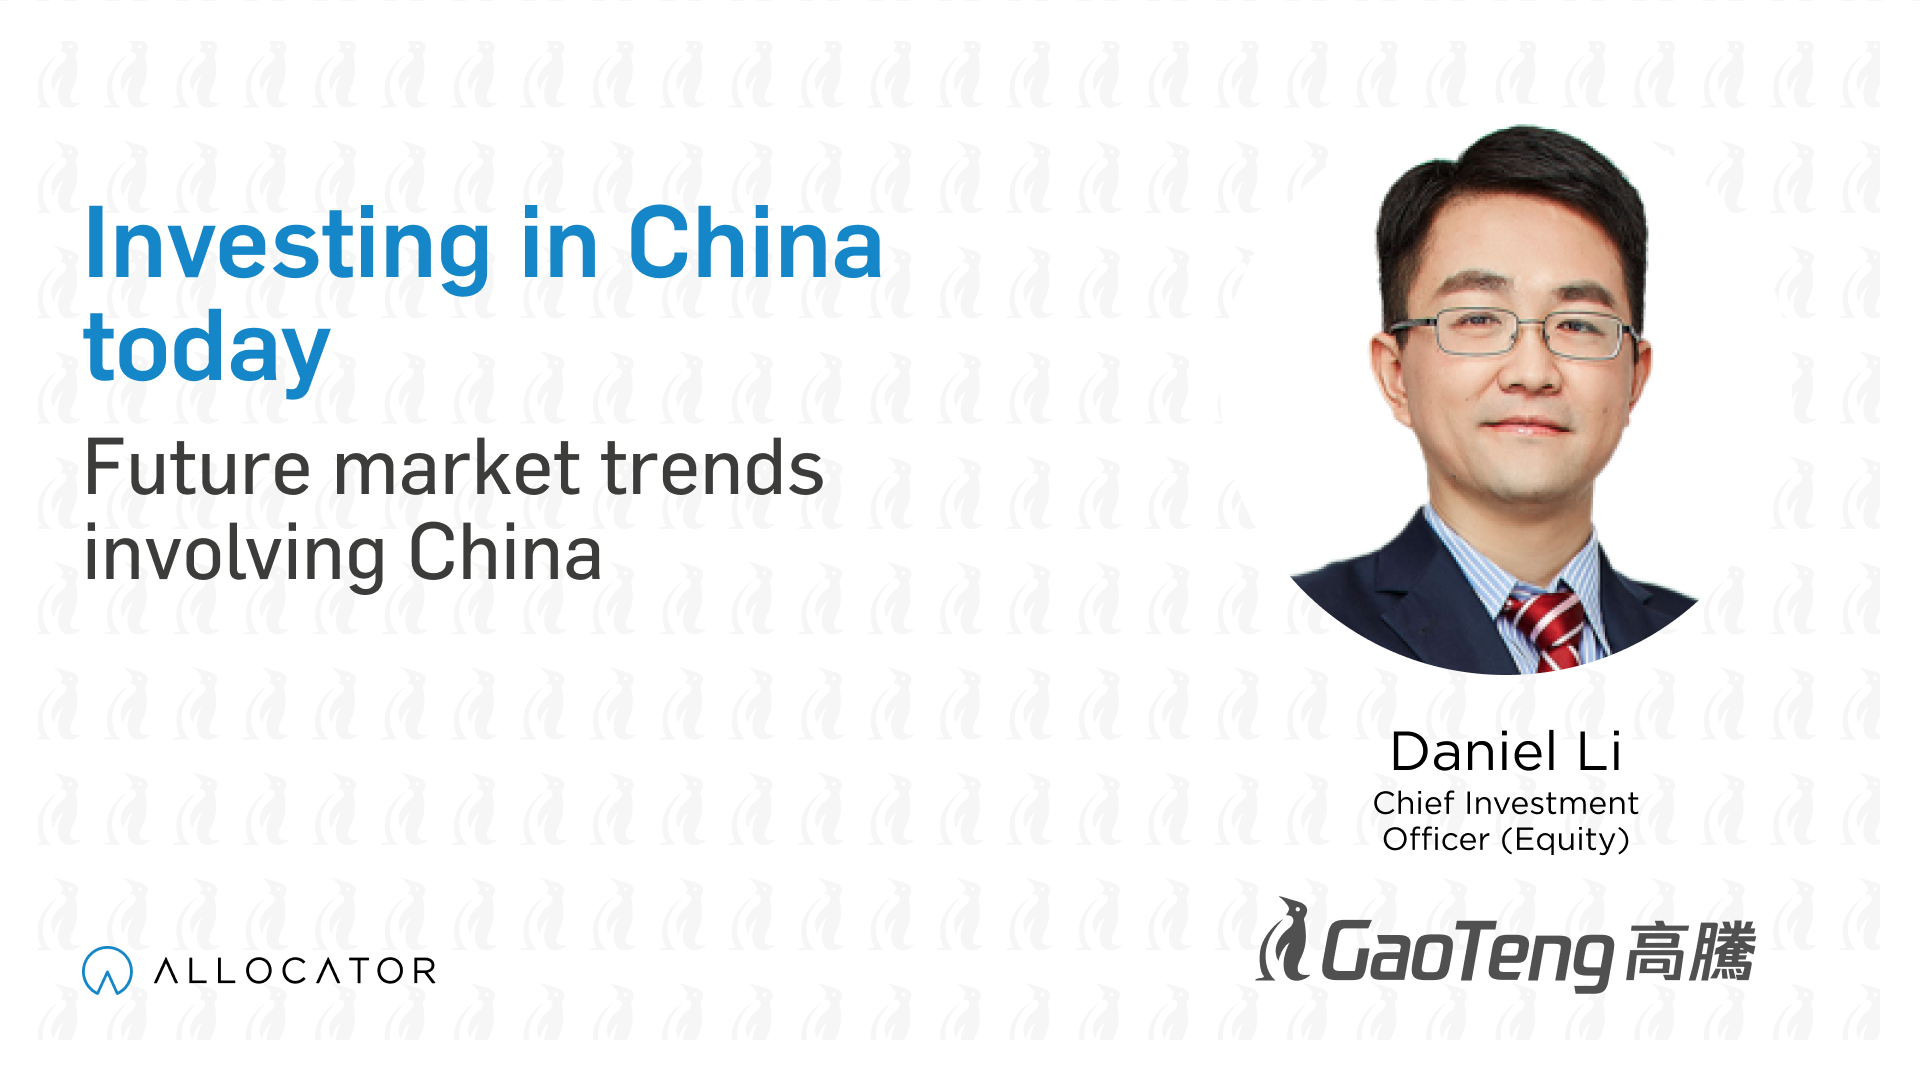 GaoTeng - Is China still investable?